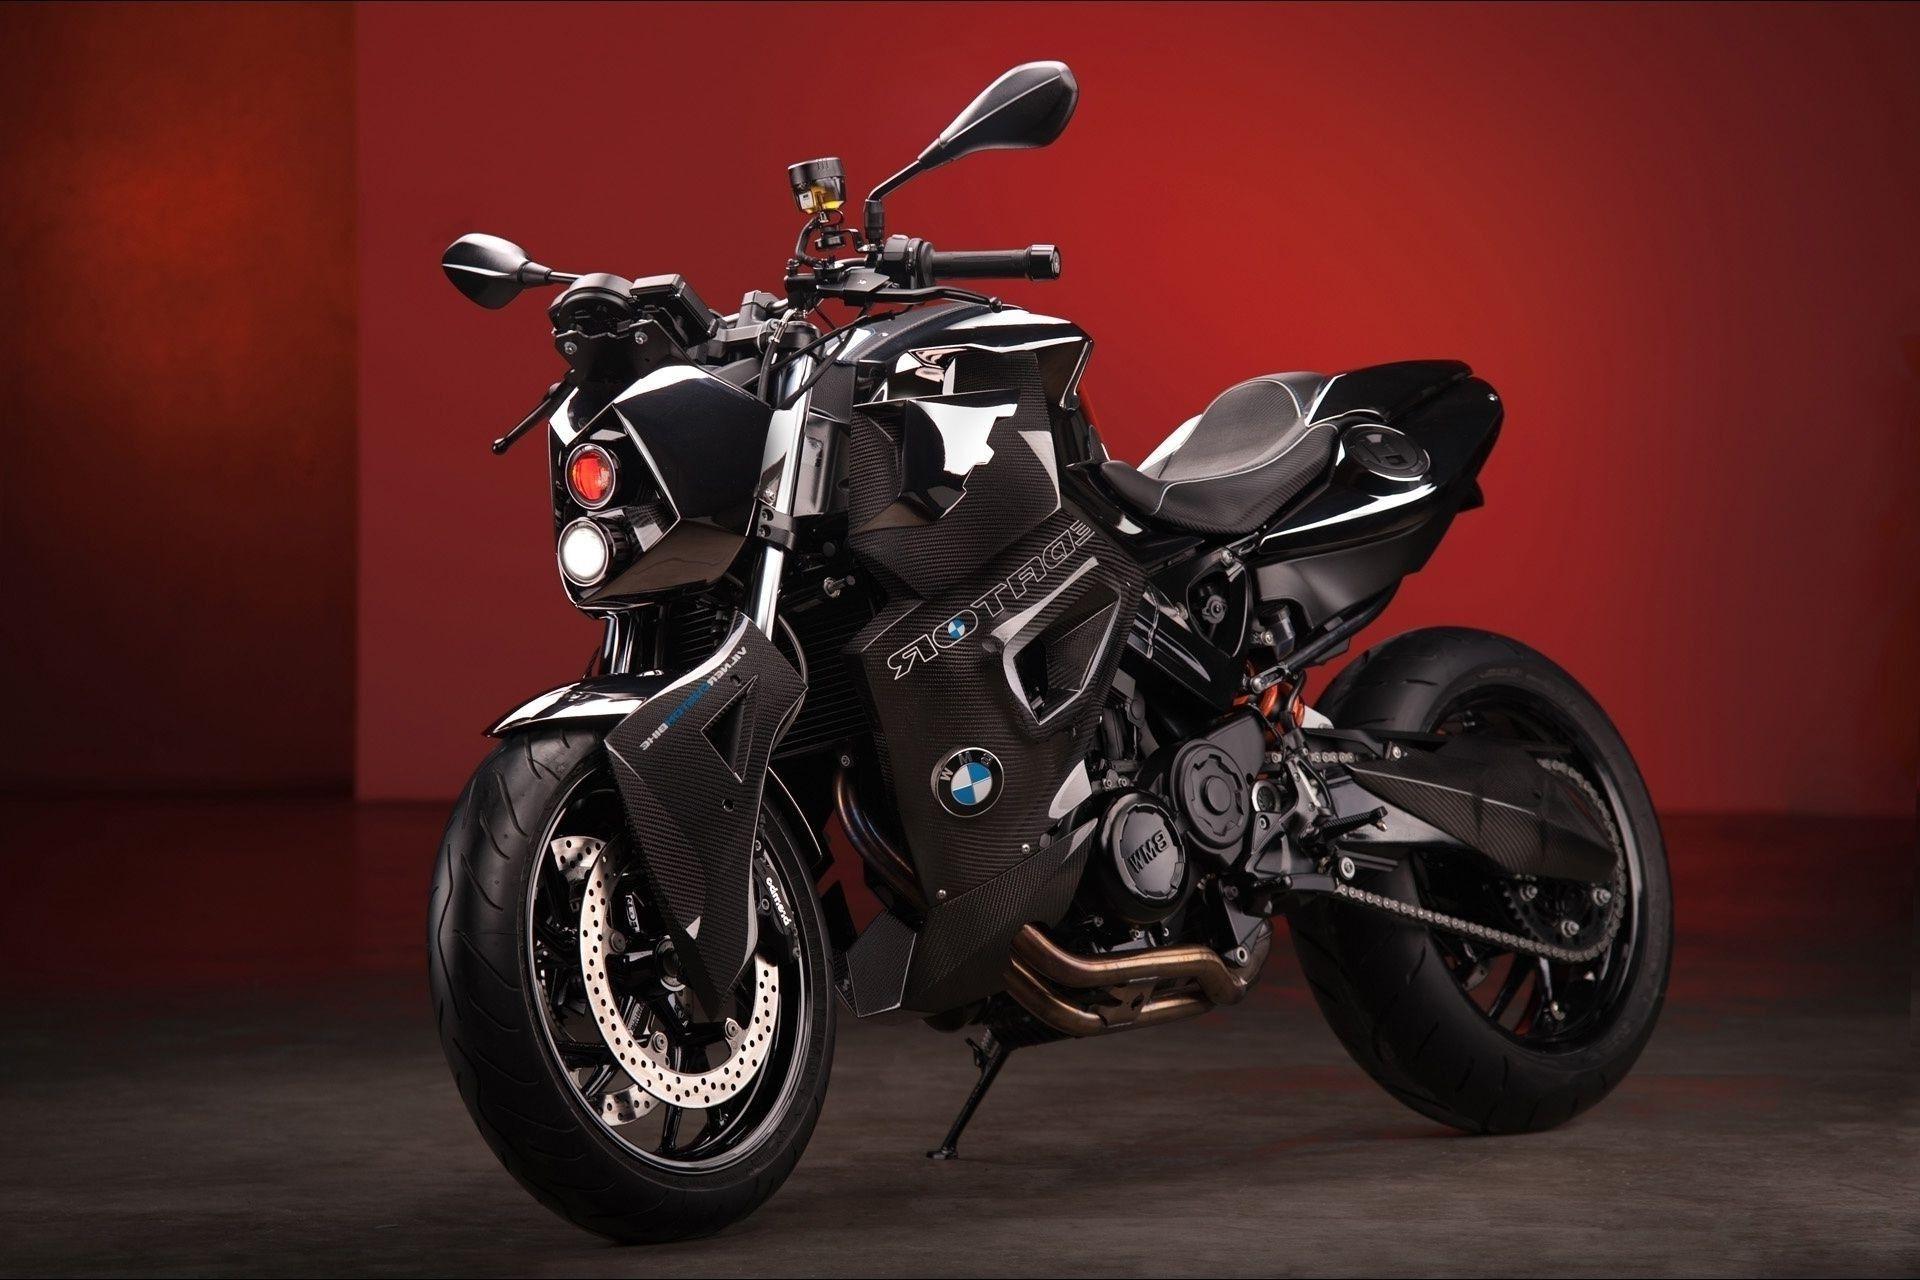 BMW bmw f800 r predator vilner custom bike motorcycle. Desktop